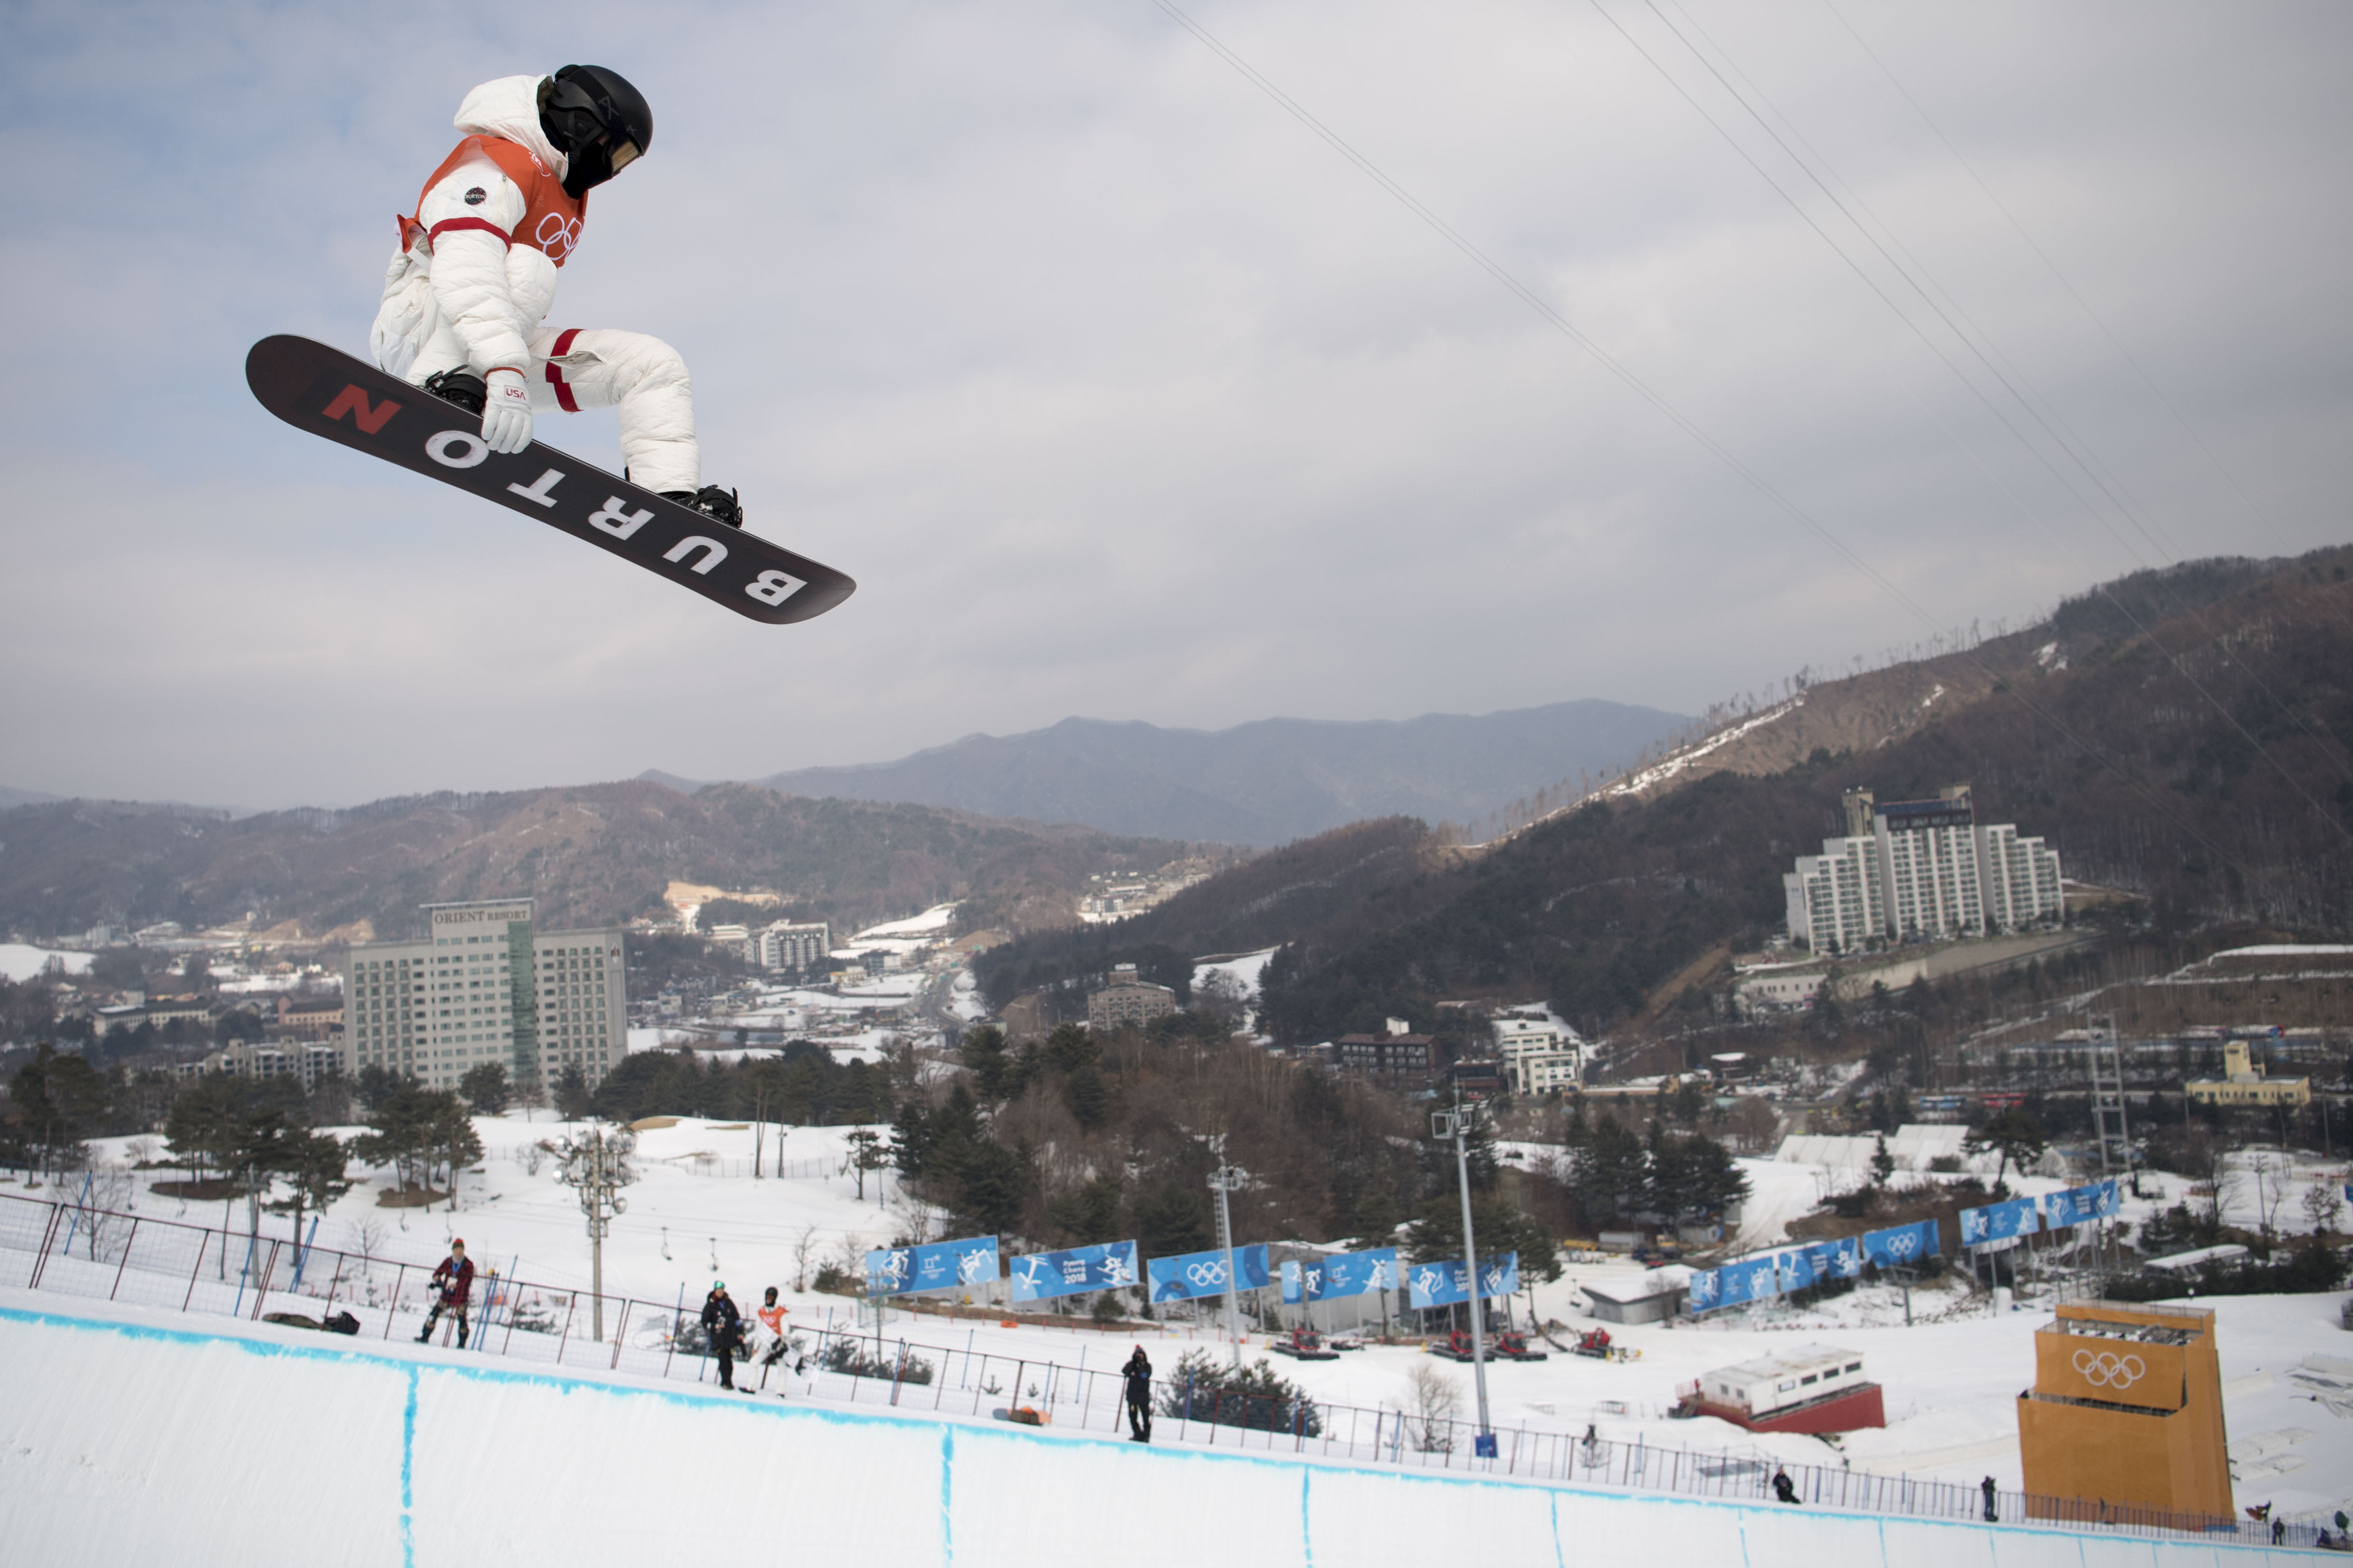 Shaun White Pyeongchang 2018 Olympic Winter Games